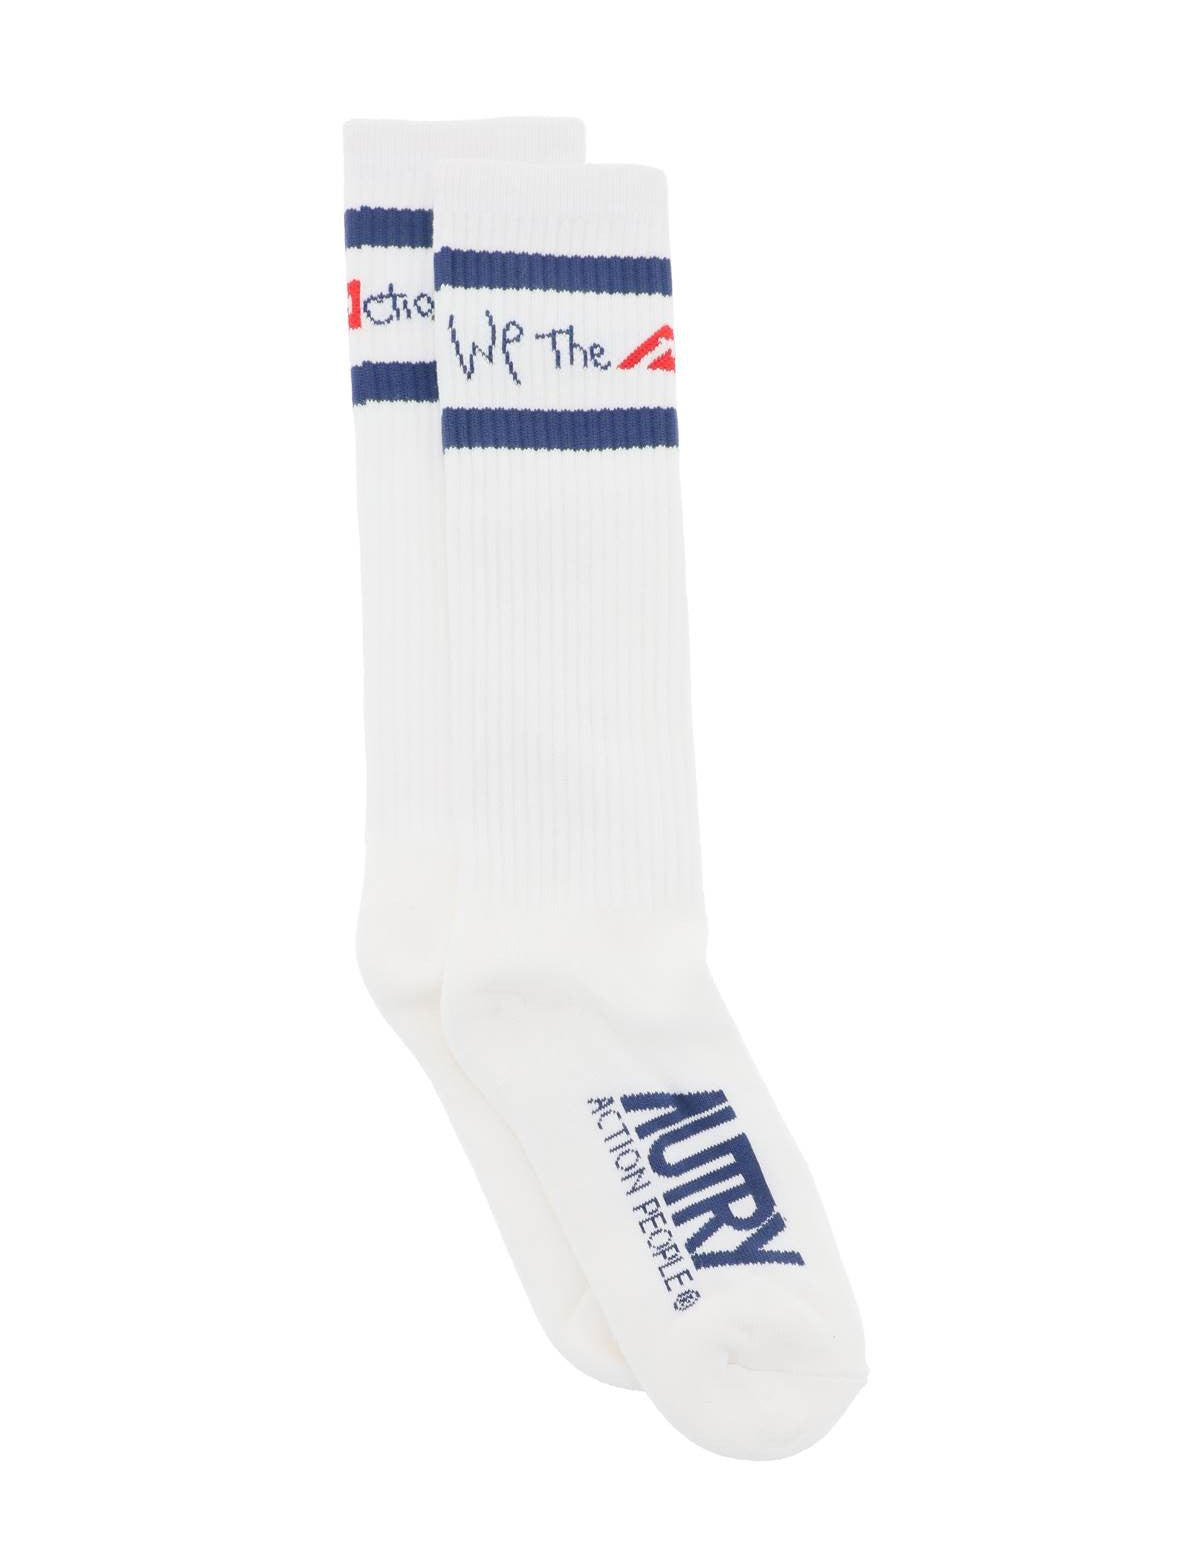 autry-socks-with-logo.jpg